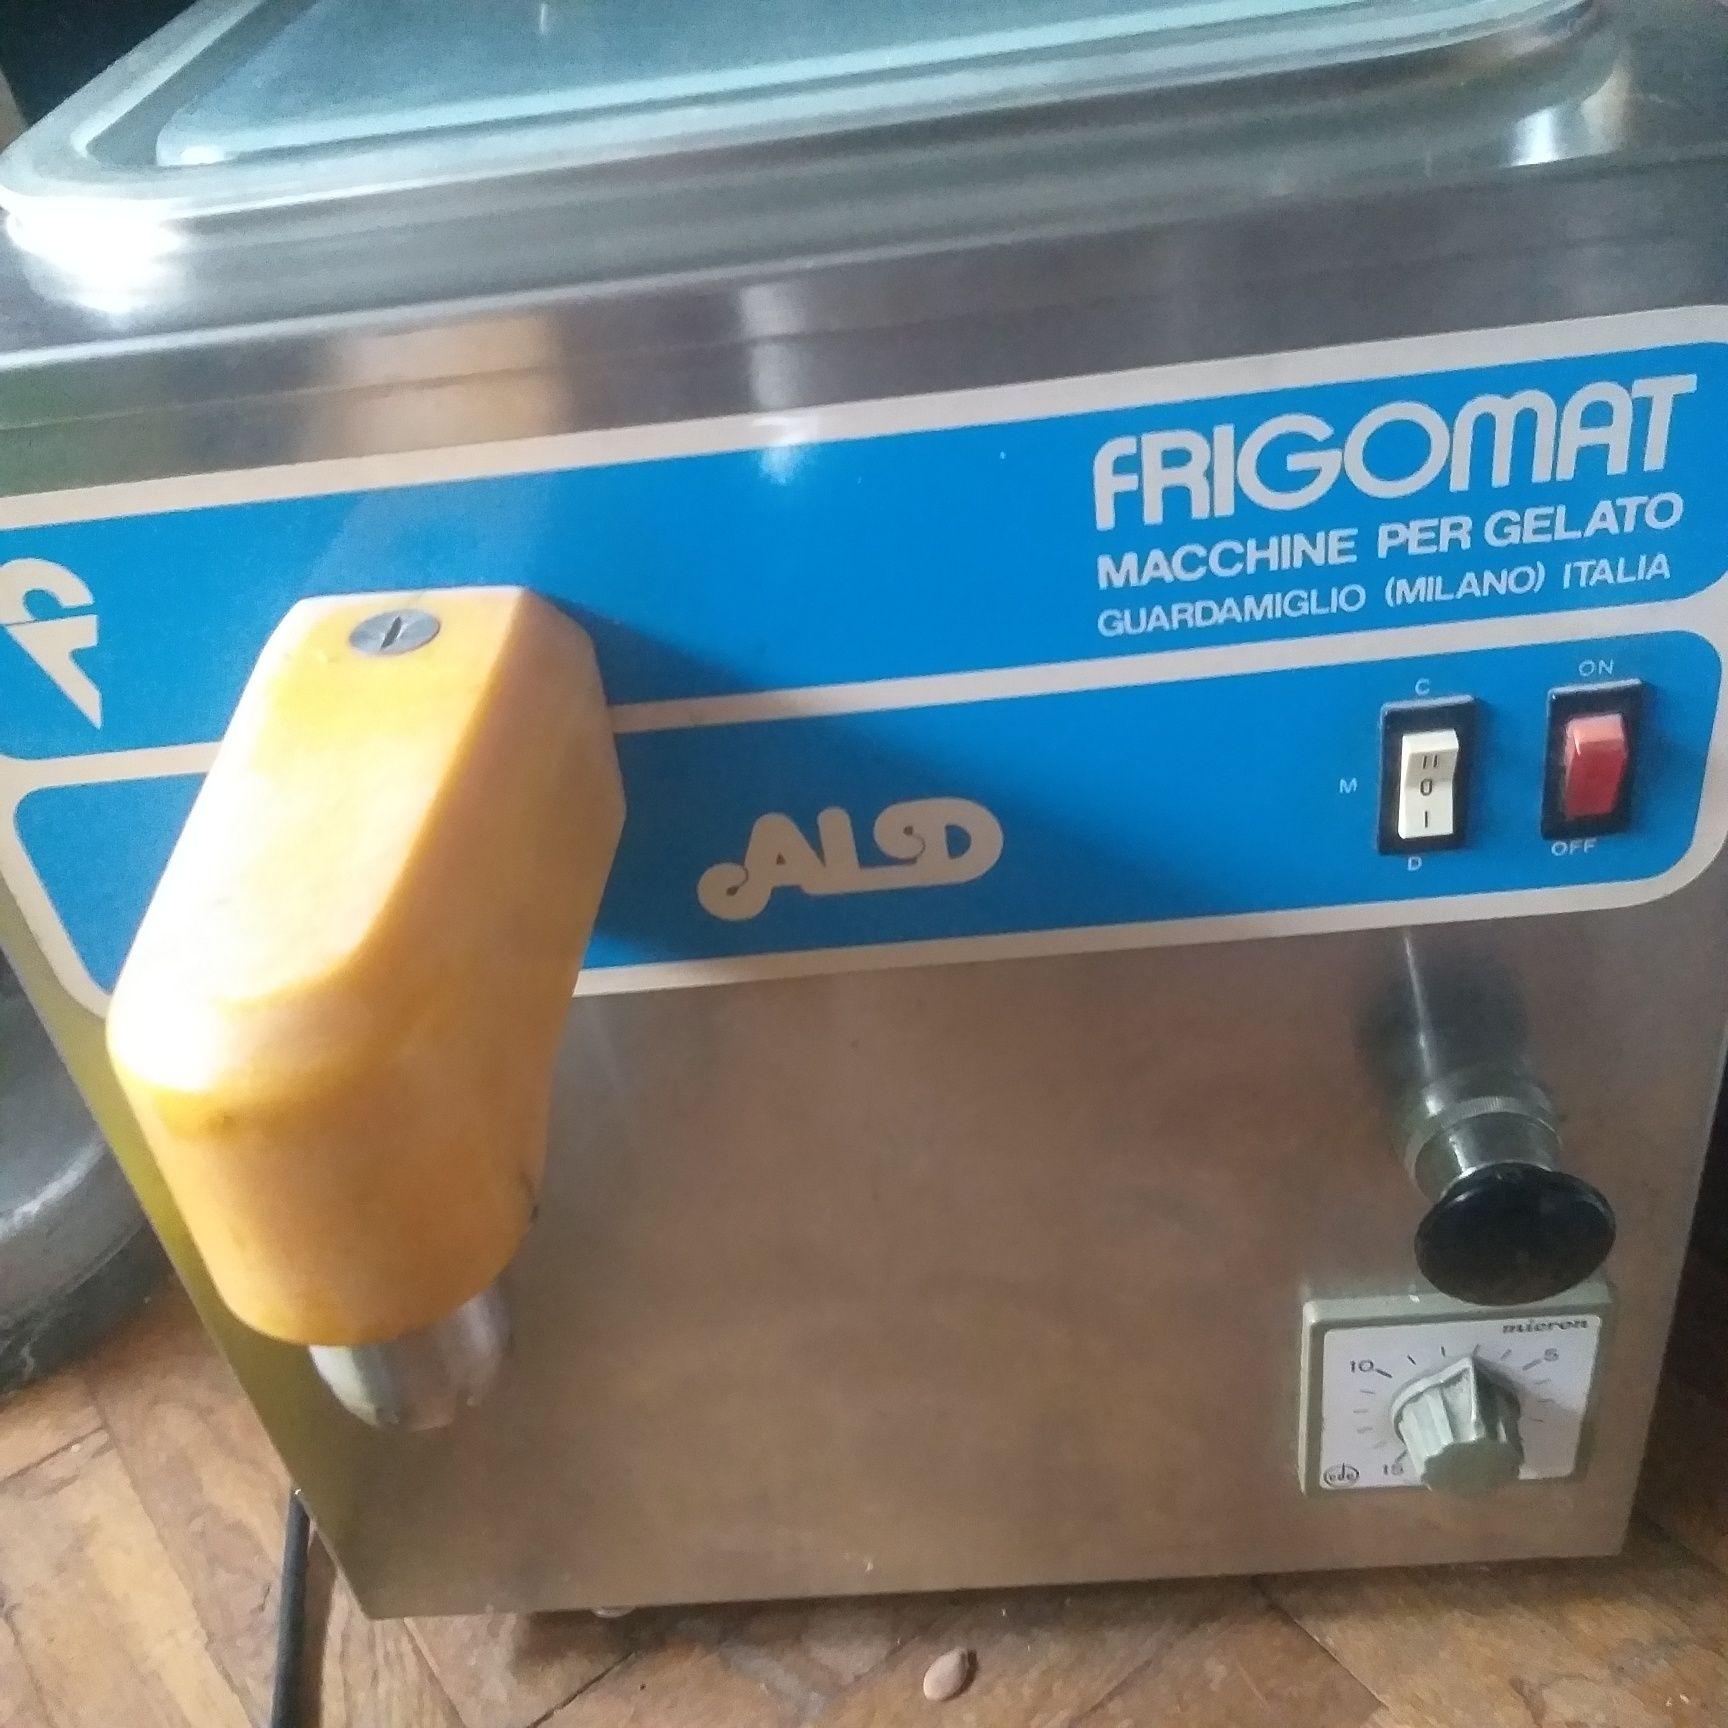 Сладолед машина Frigomat